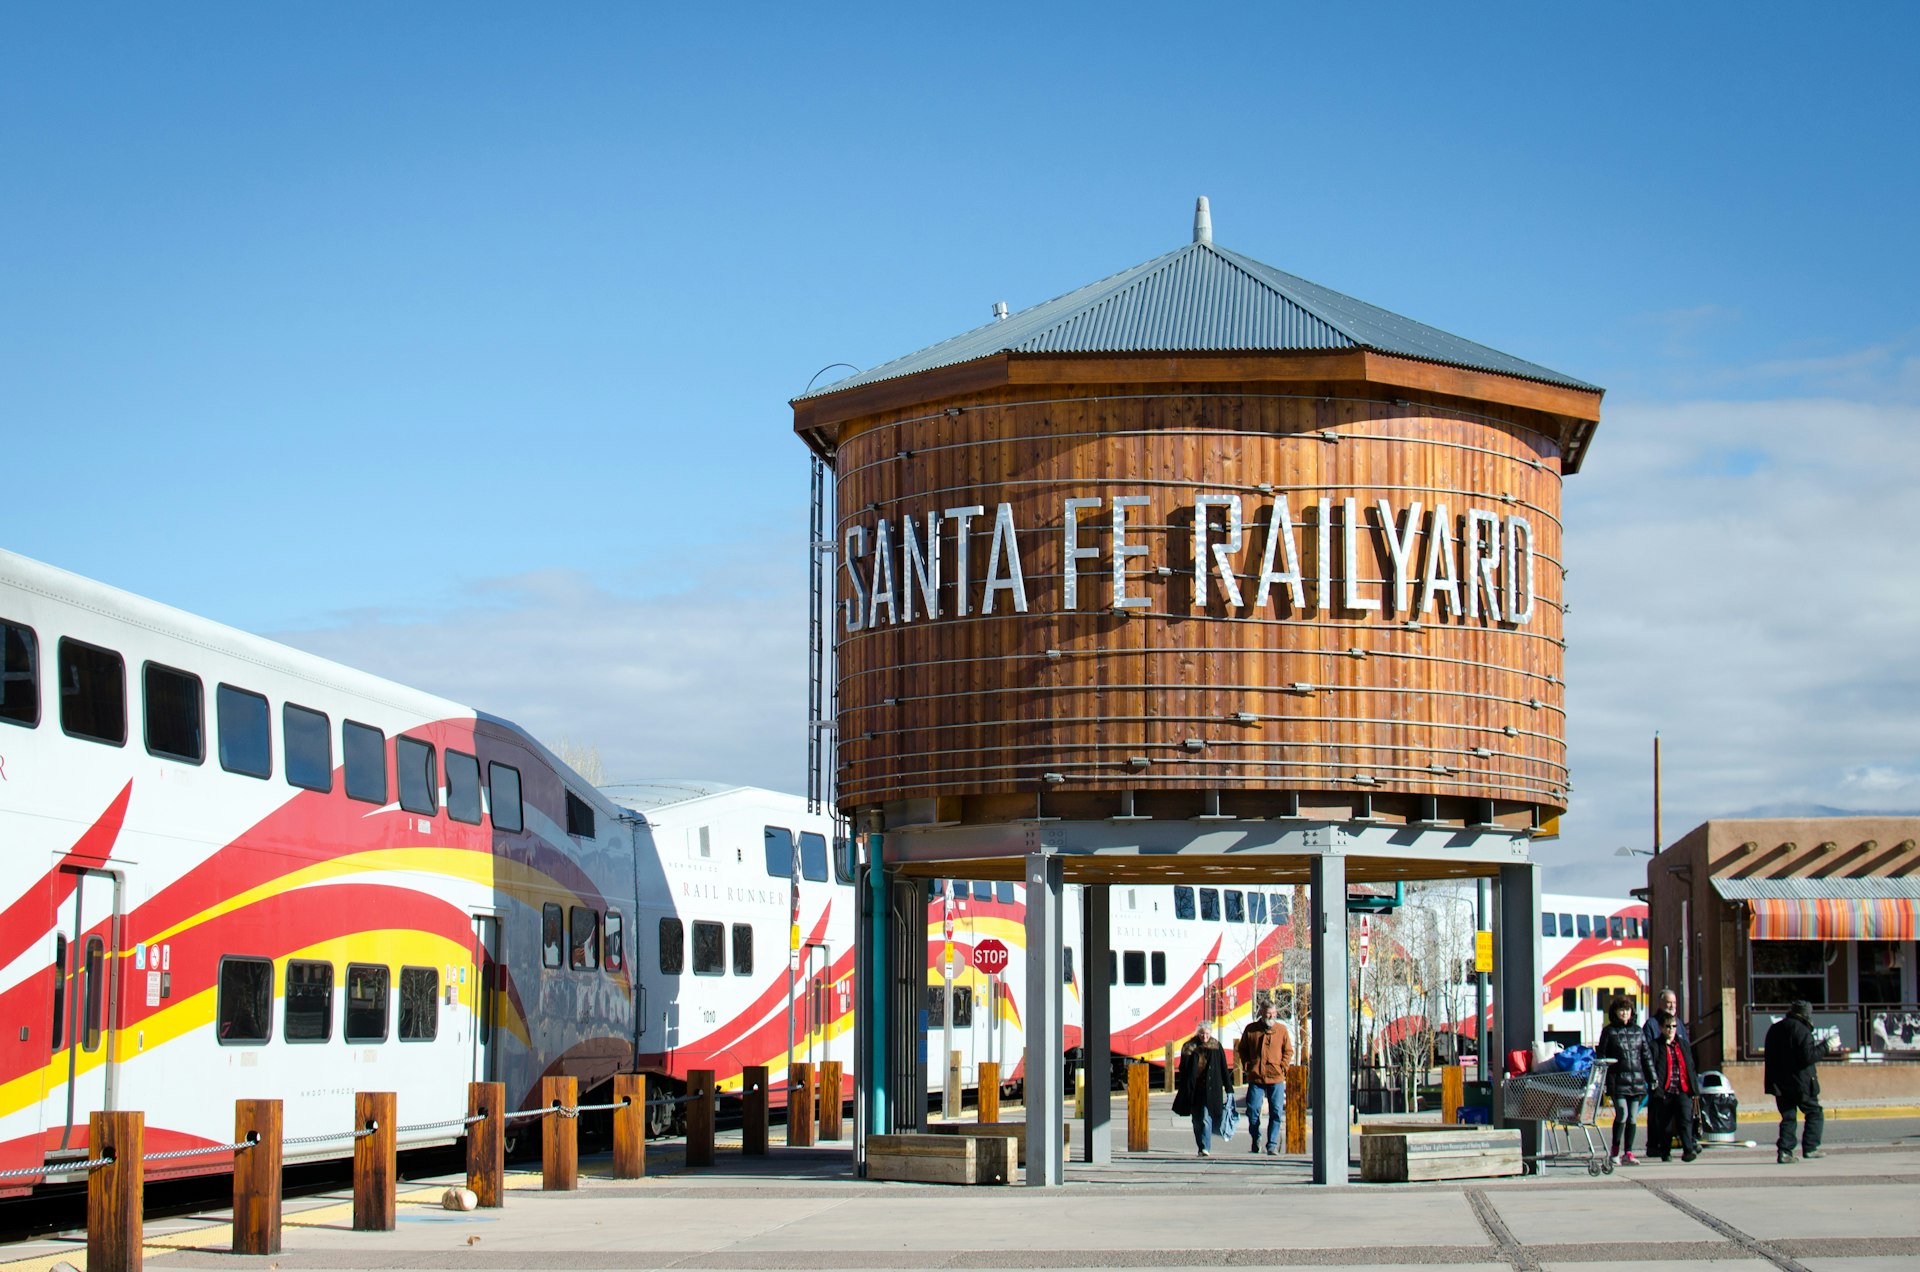 Santa Fe Depot Station/Santa Fe Railway